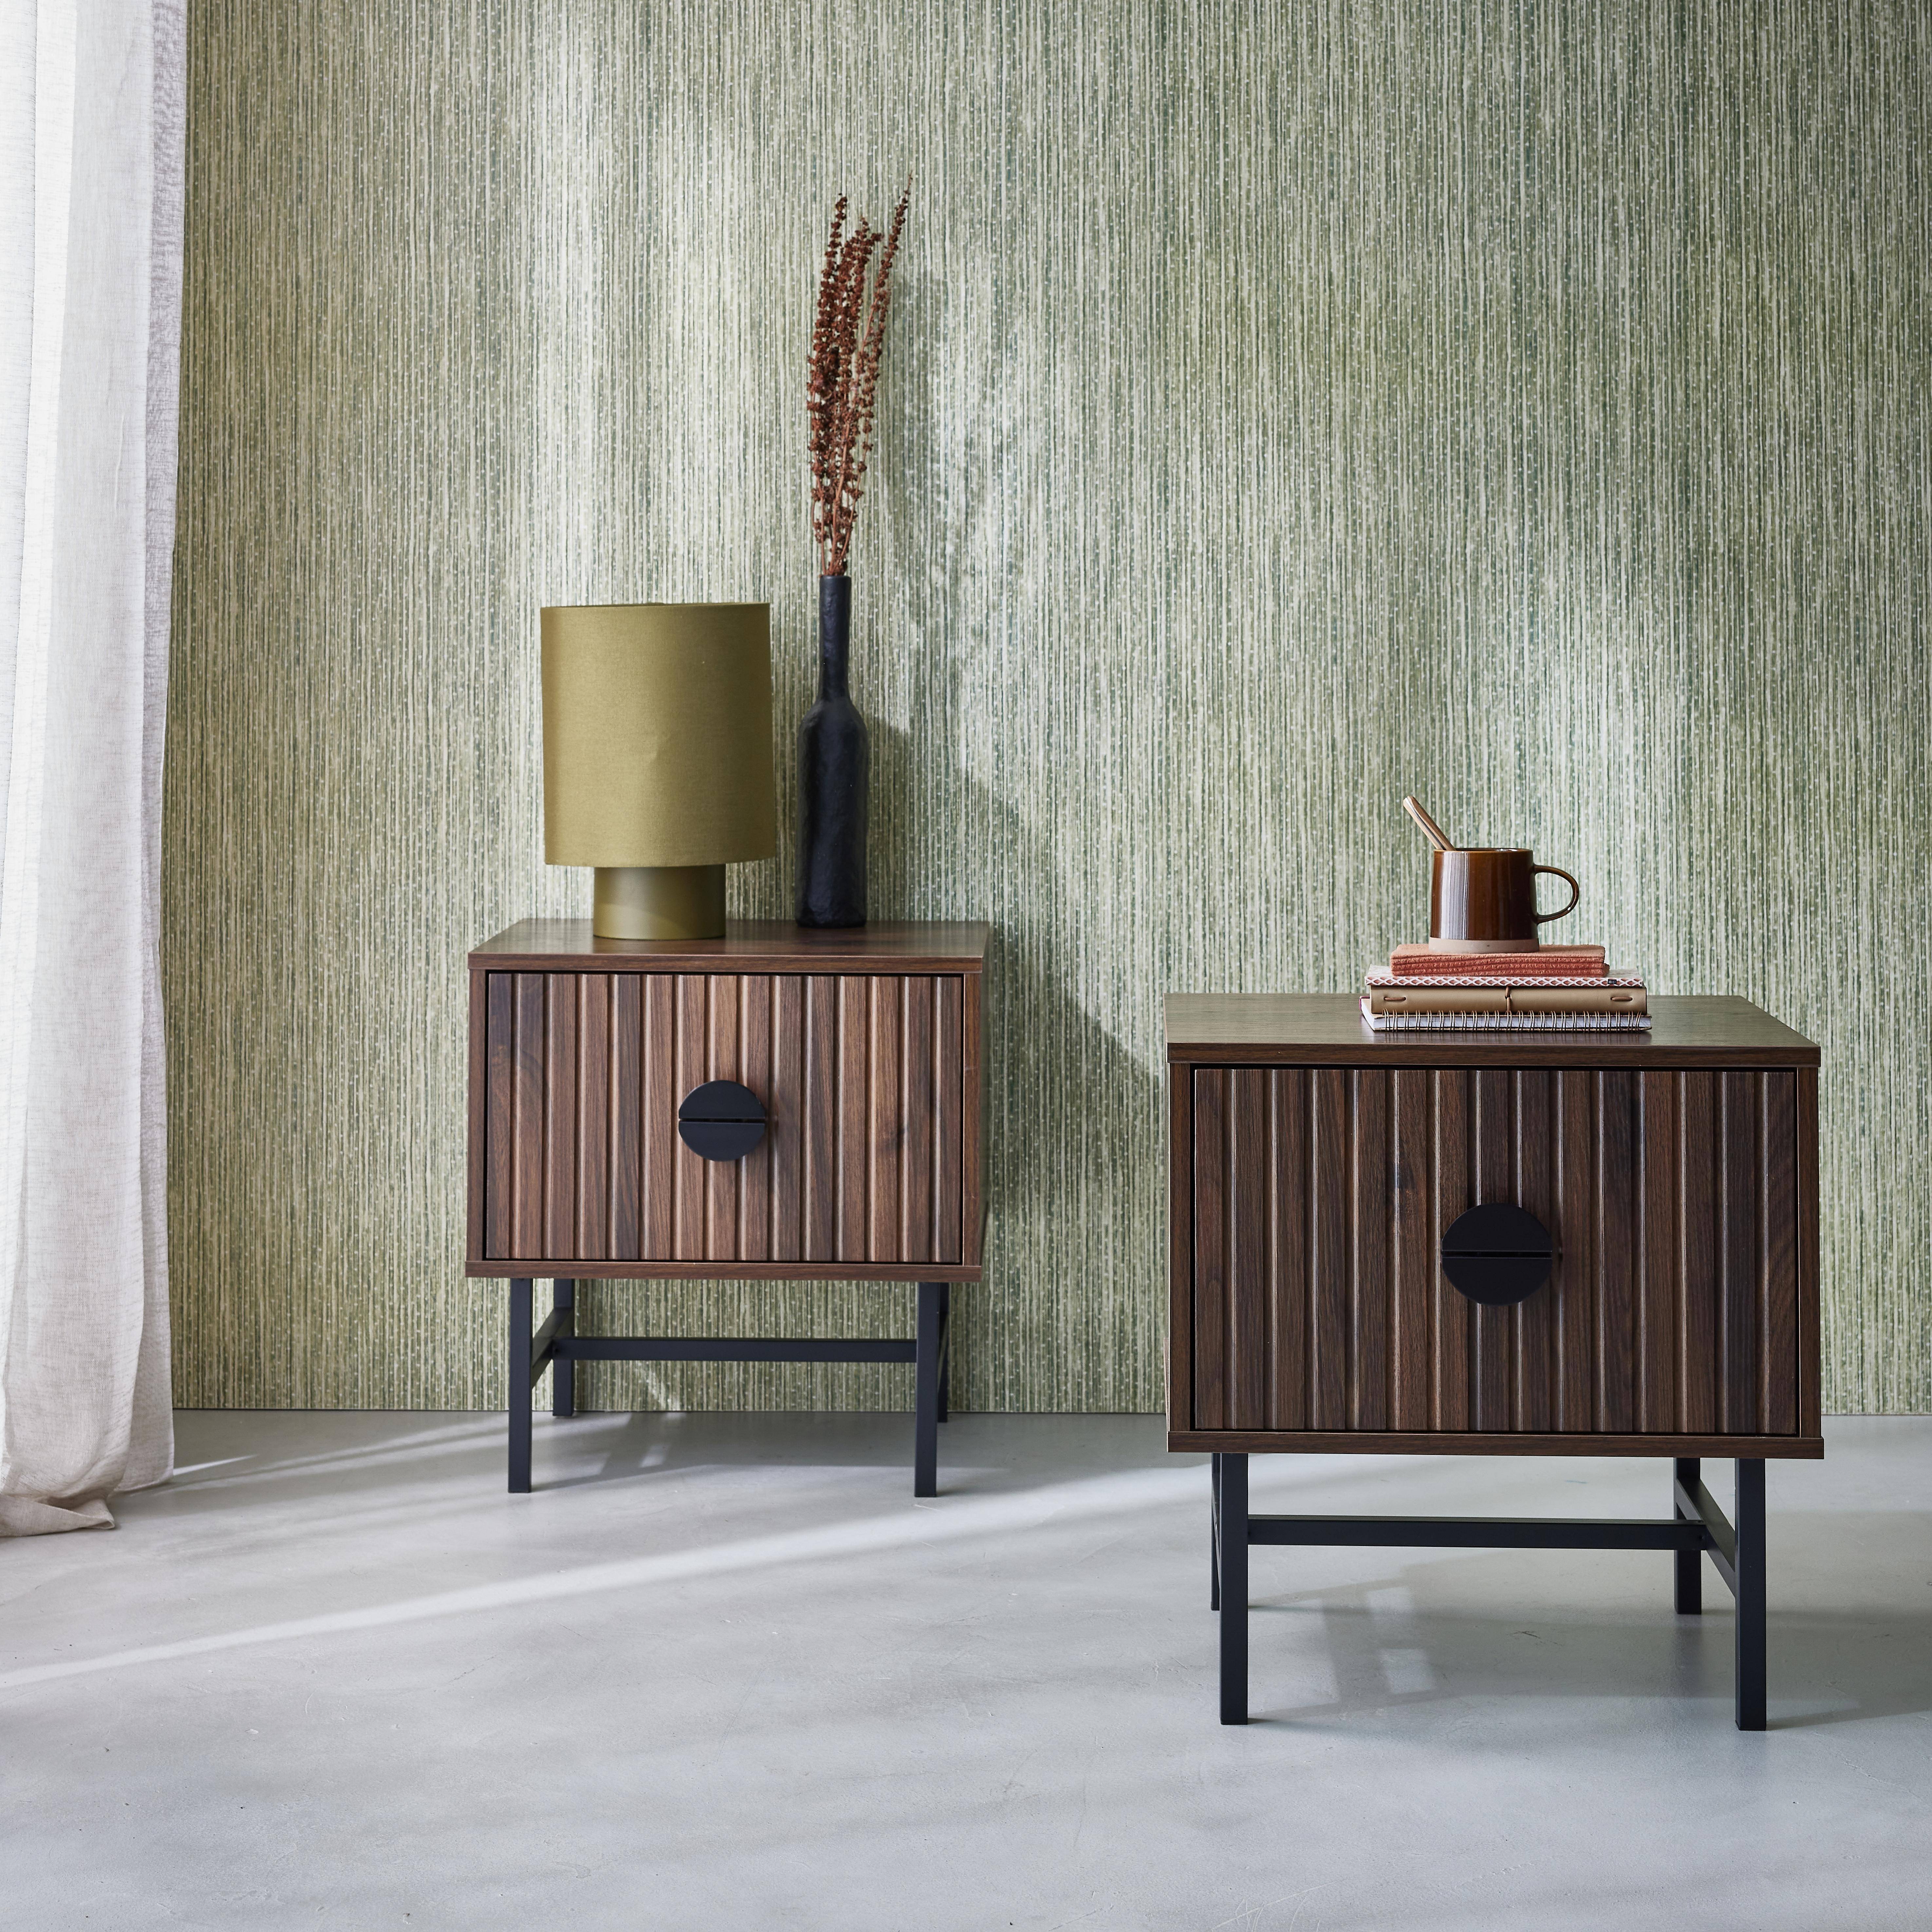 Set of 2 dark wood effect bedside tables, one drawer, L 48 x W 39 x H 50cm Photo1